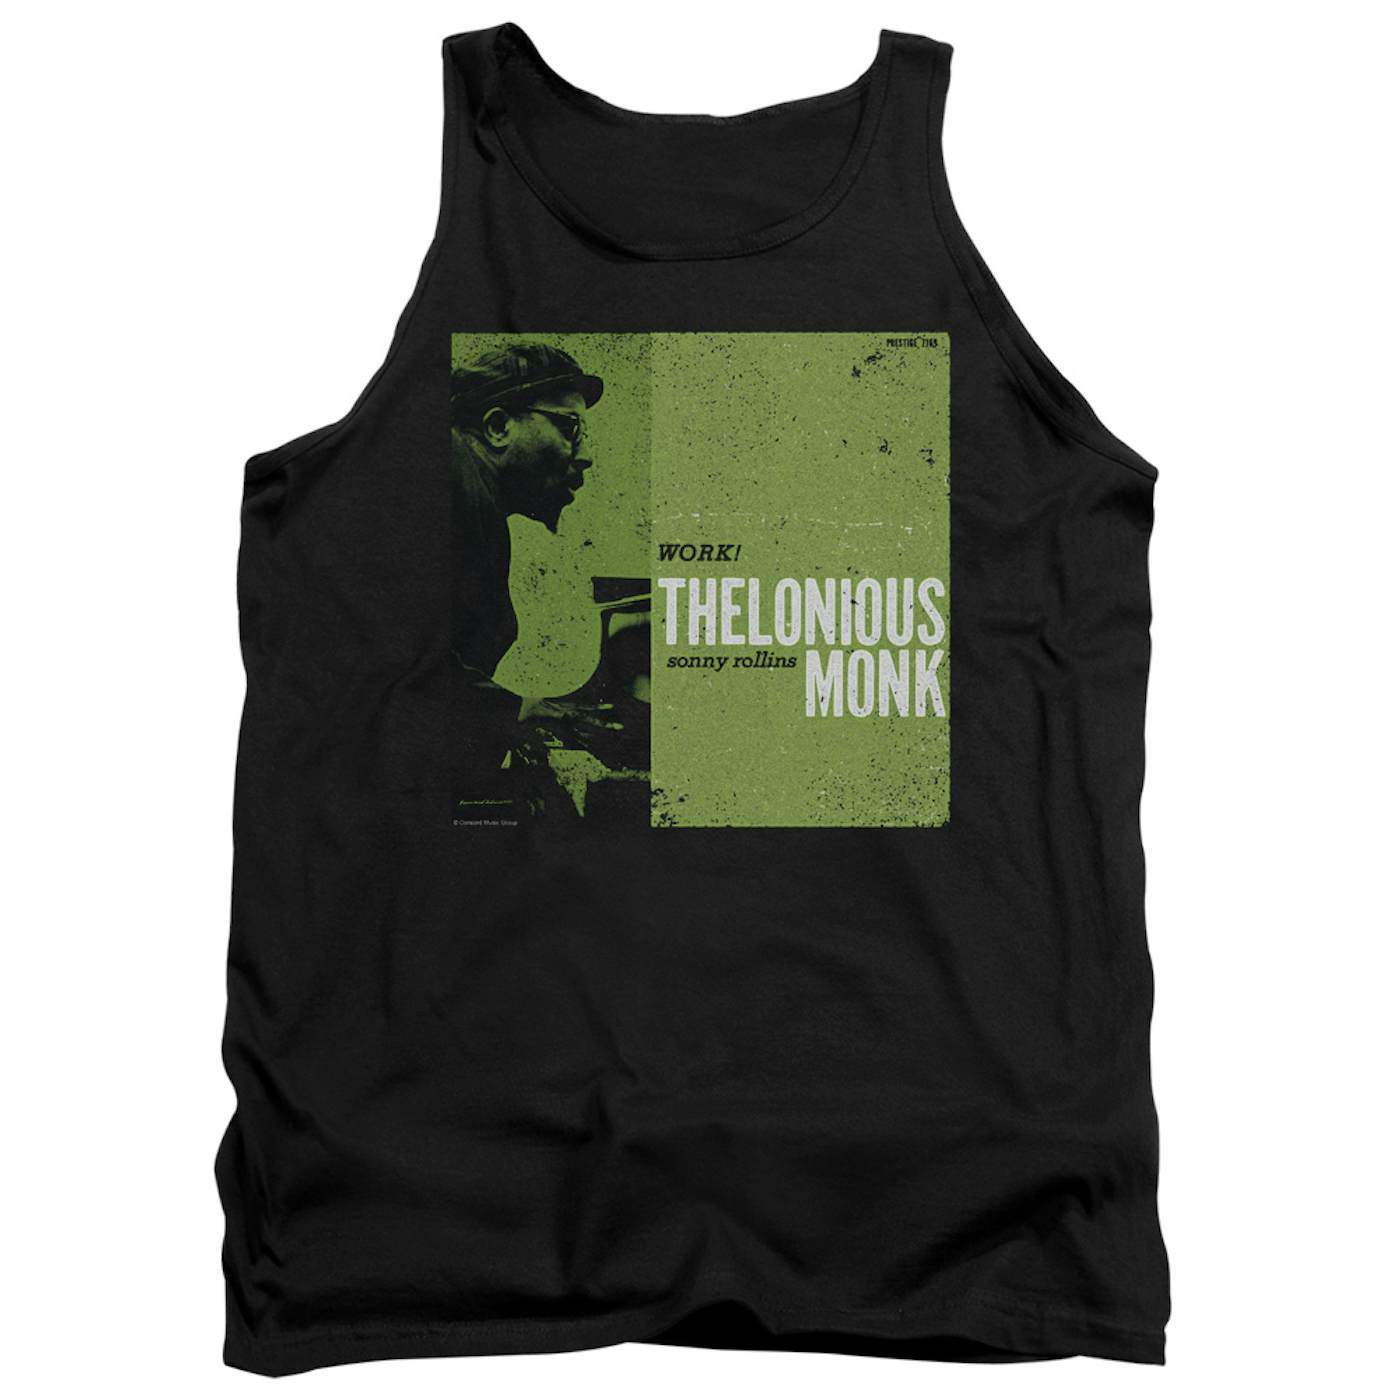 Thelonious Monk Tank Top | WORK Sleeveless Shirt